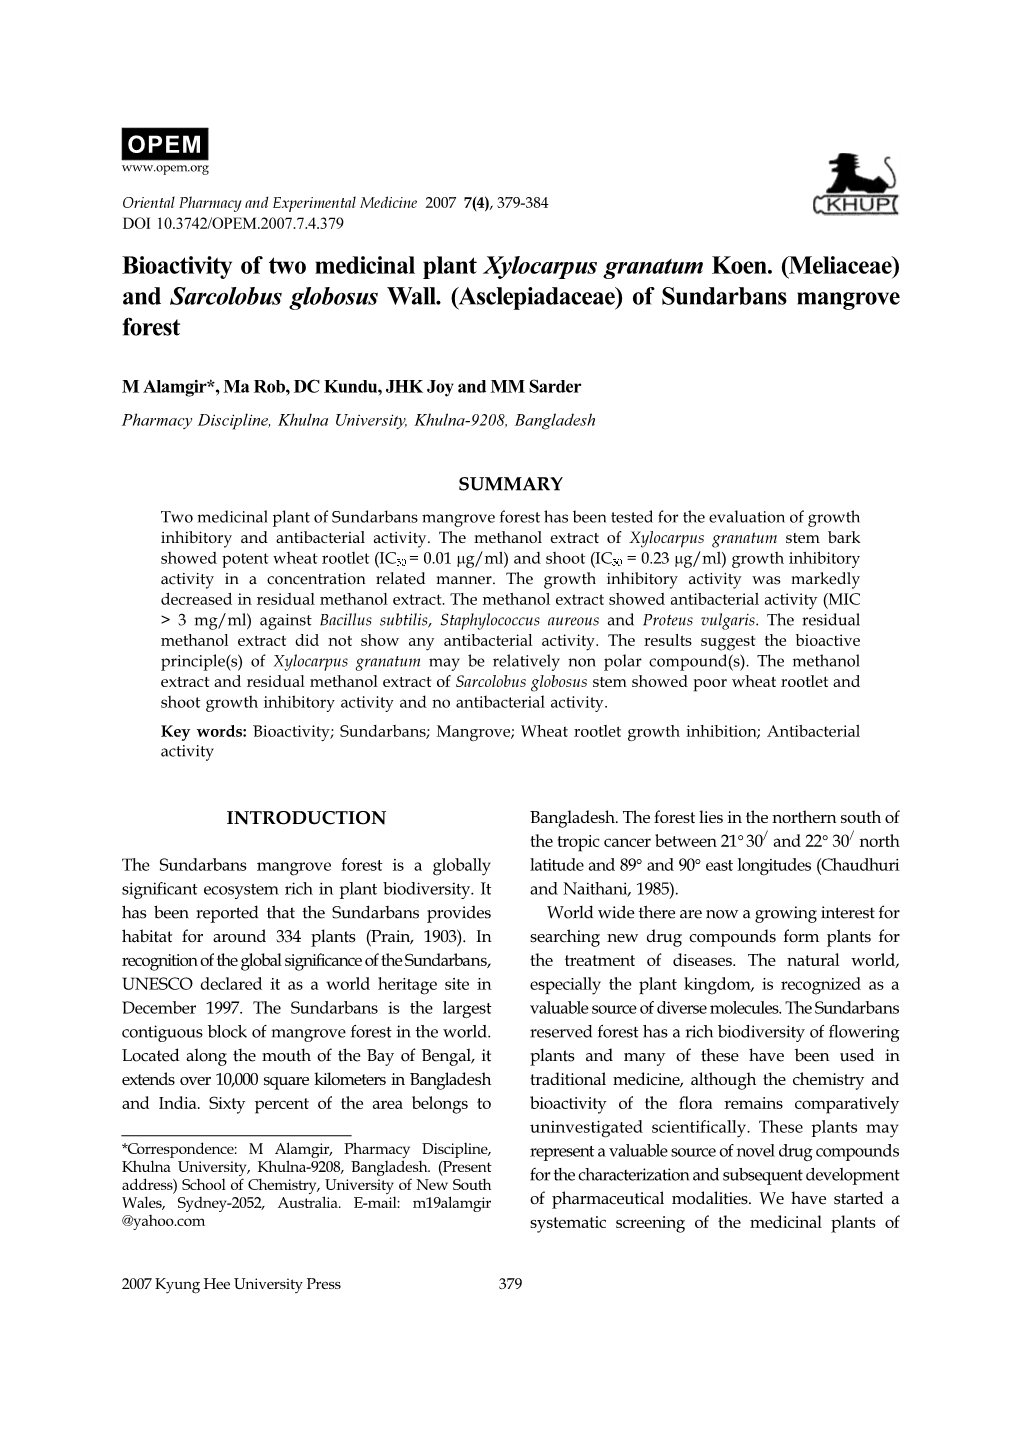 Bioactivity of Two Medicinal Plant Xylocarpus Granatum Koen